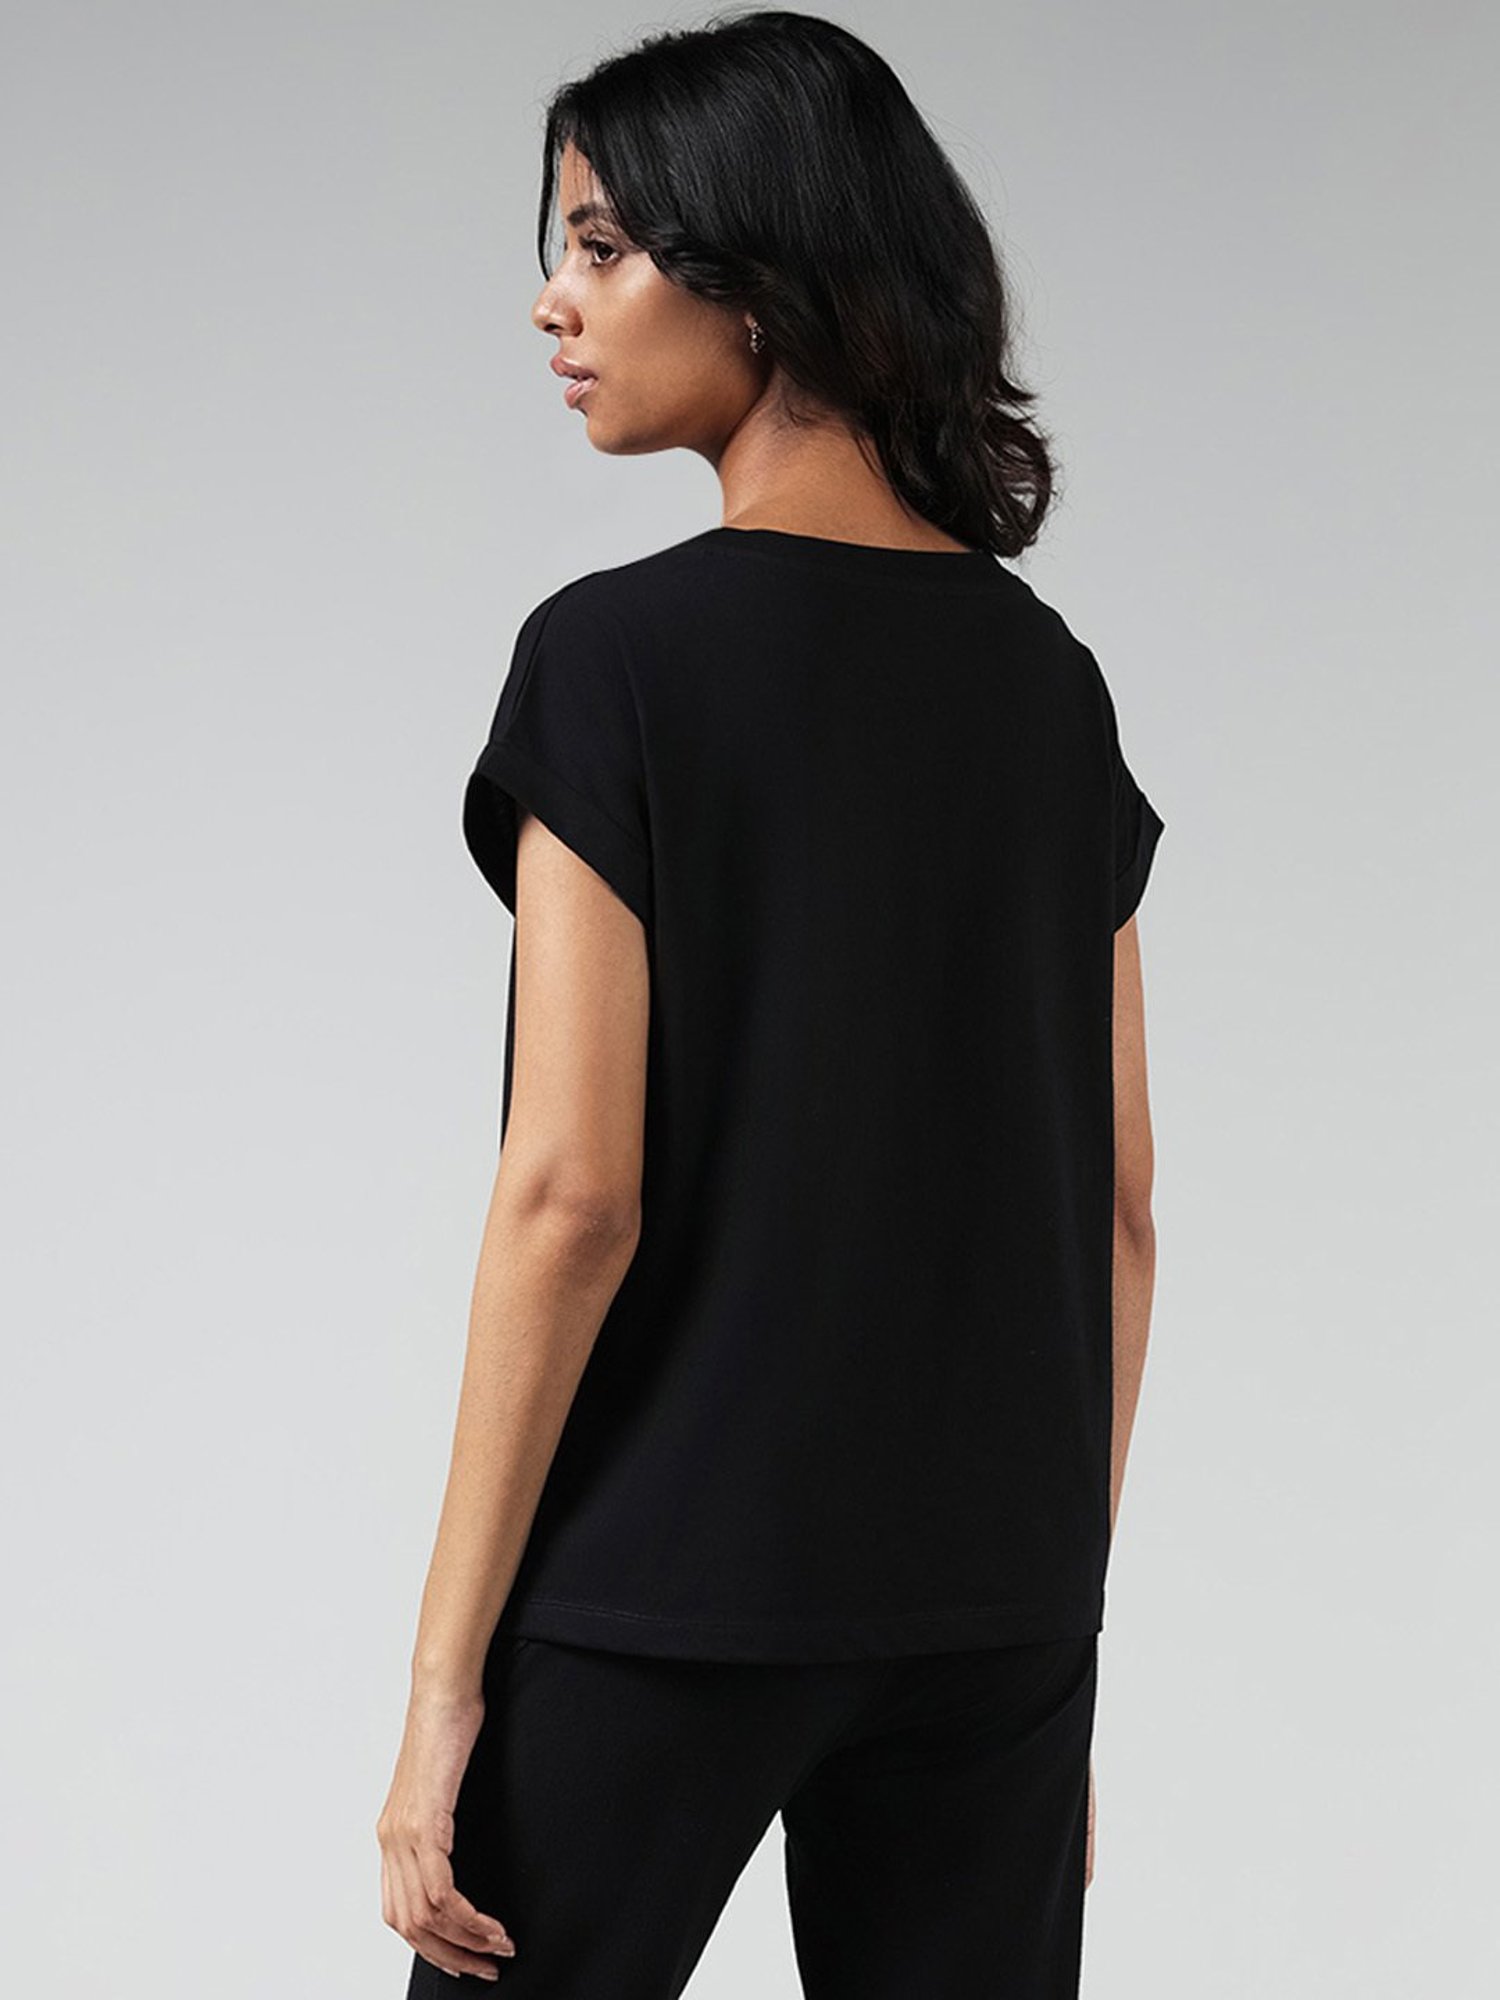 Studiofit by Westside Black Printed T-Shirt